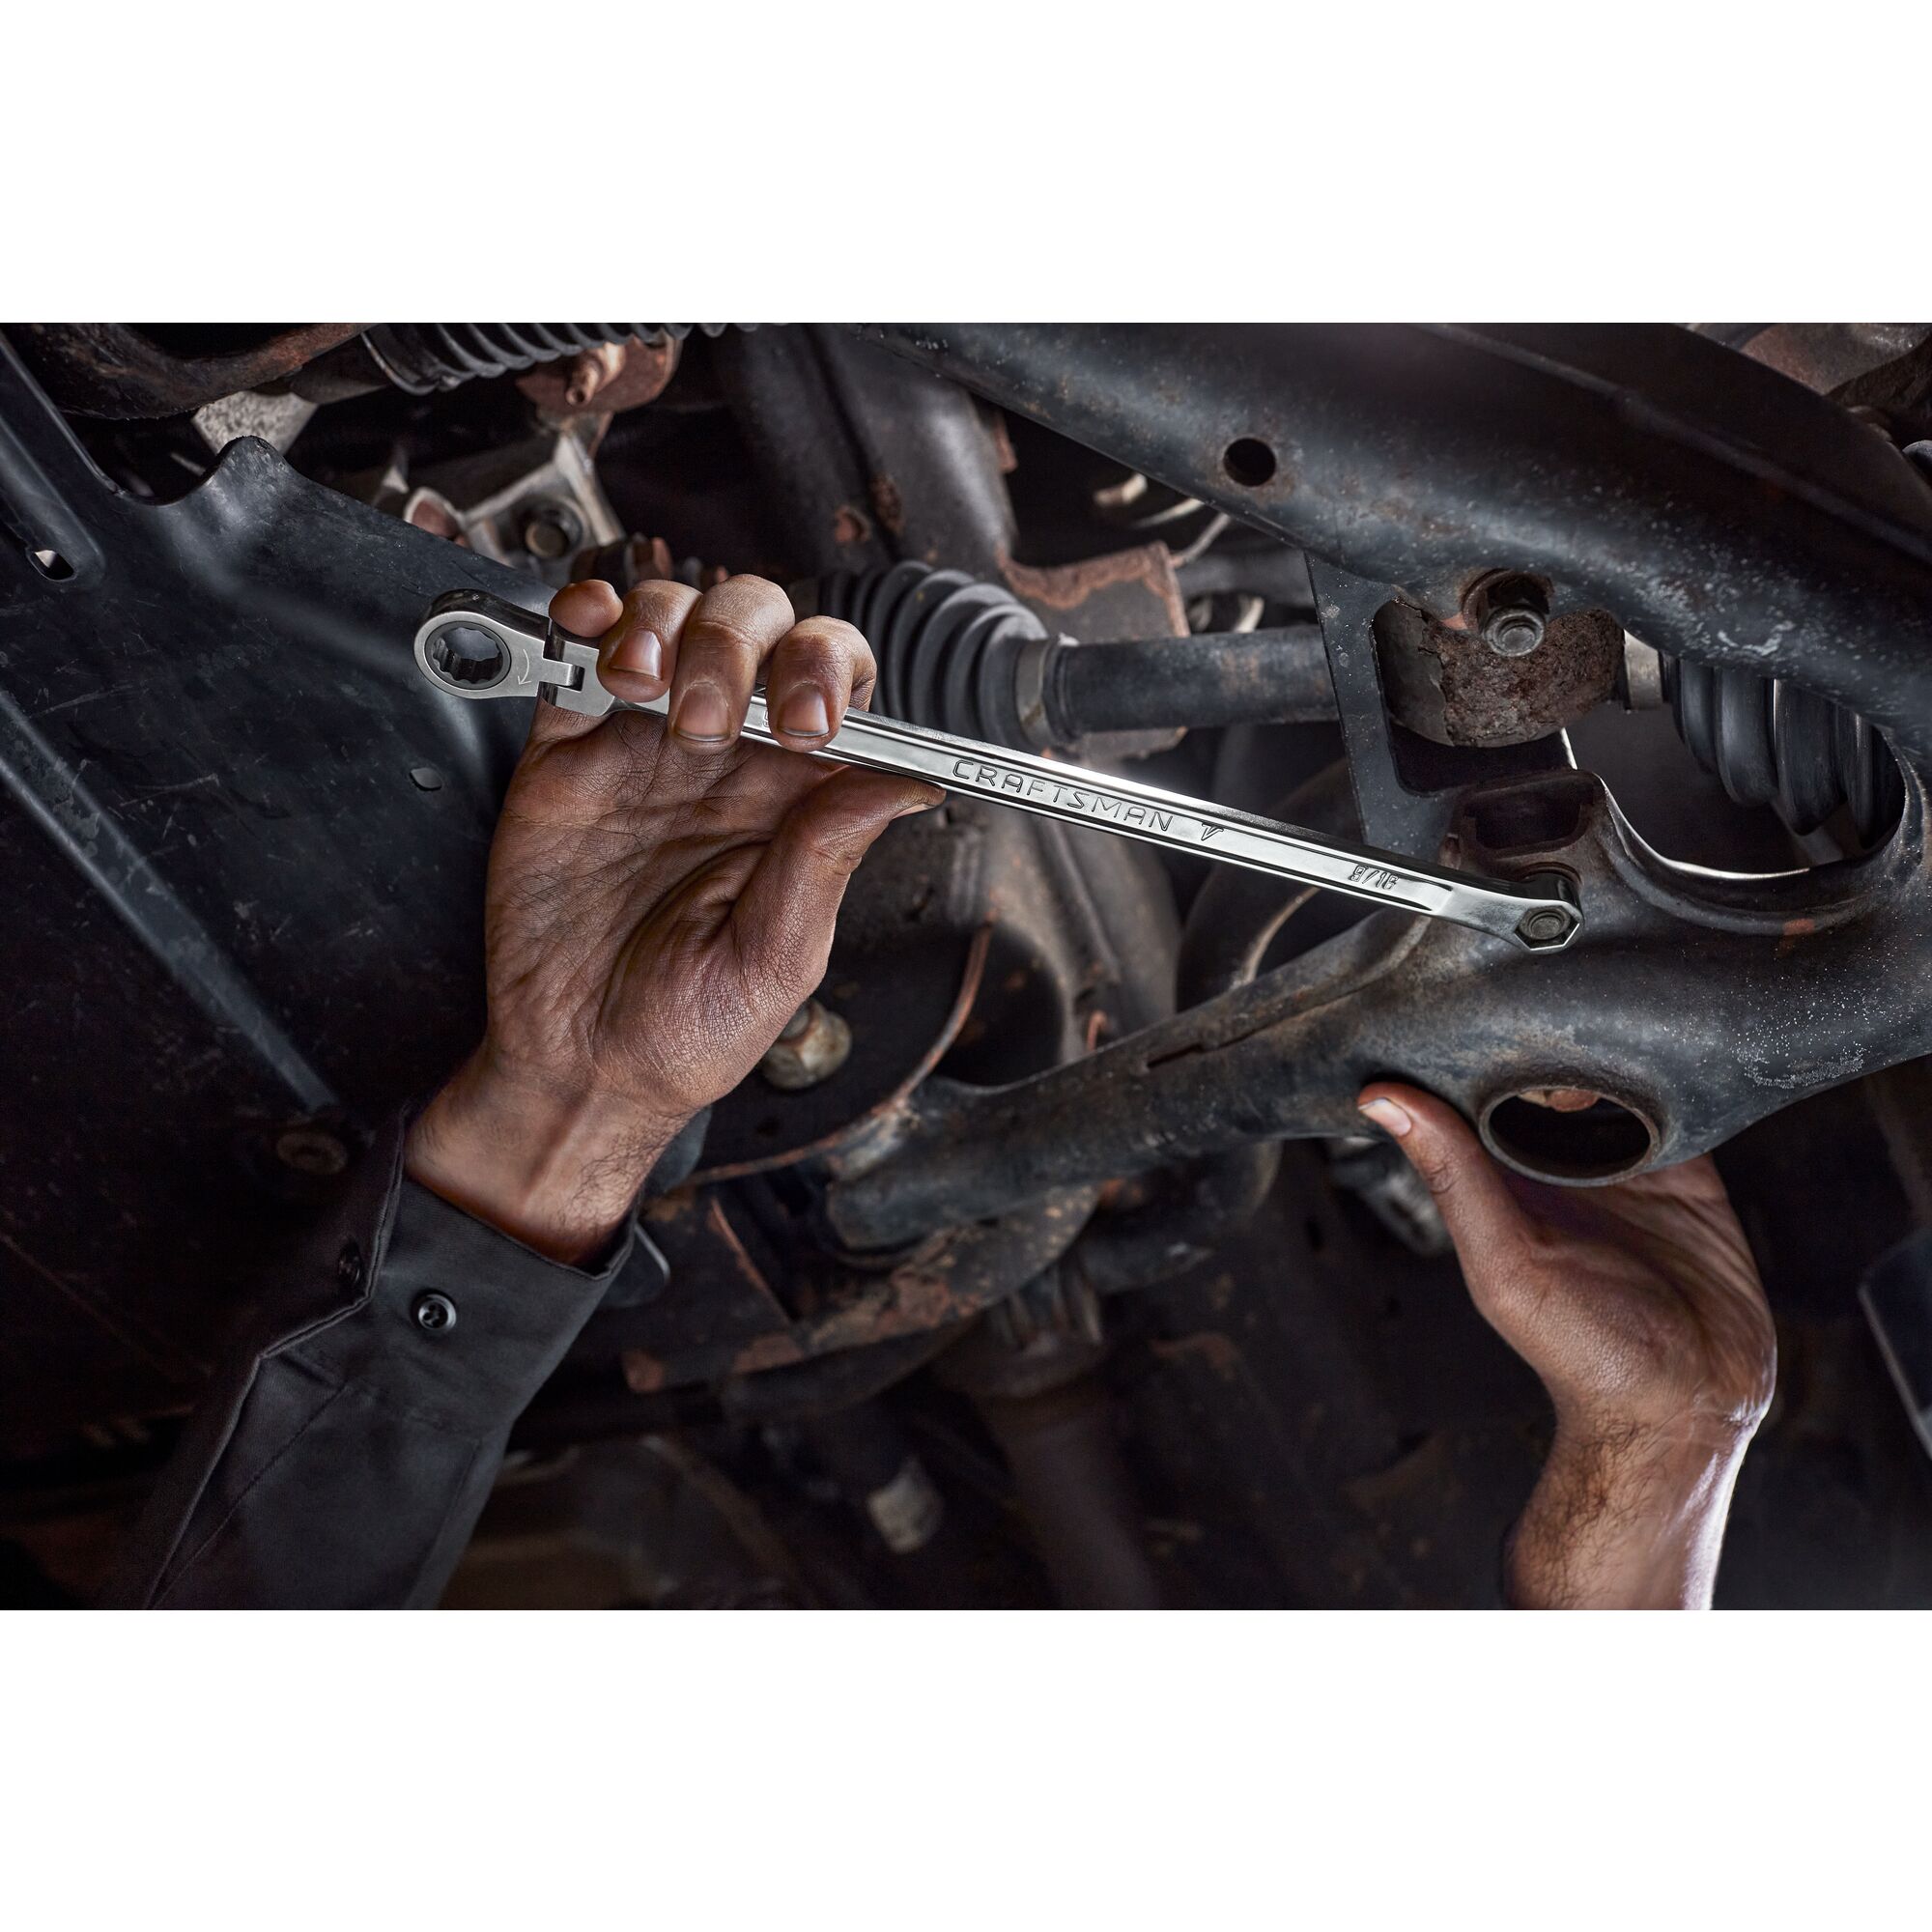 CRAFTSMAN V-Series™ wrench tightening bolt